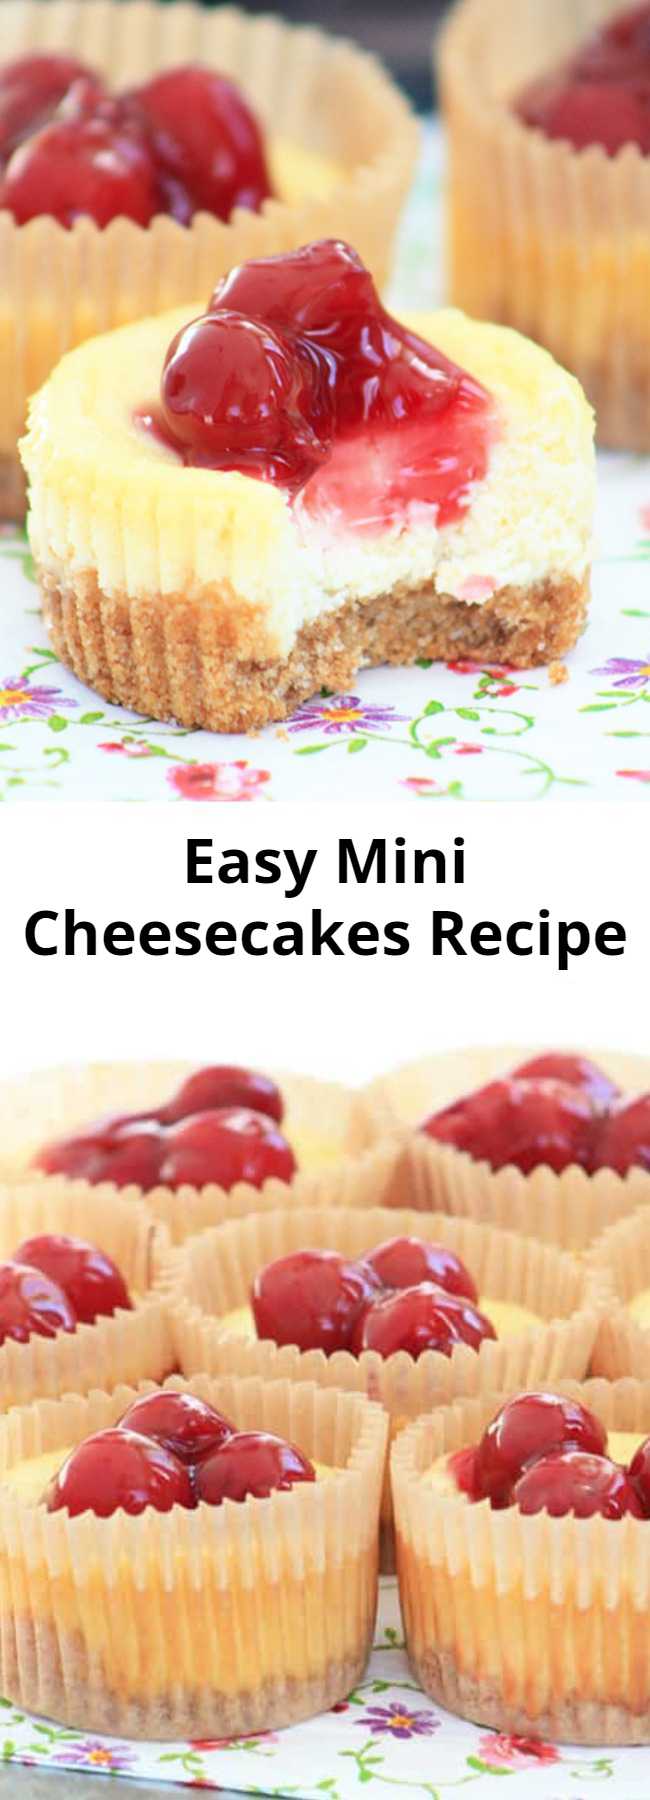 Easy Mini Cheesecakes Recipe - A mini cheesecake recipe using graham cracker crumbs, cream cheese, and cherry pie filling. My kids beg me to make these again and again!